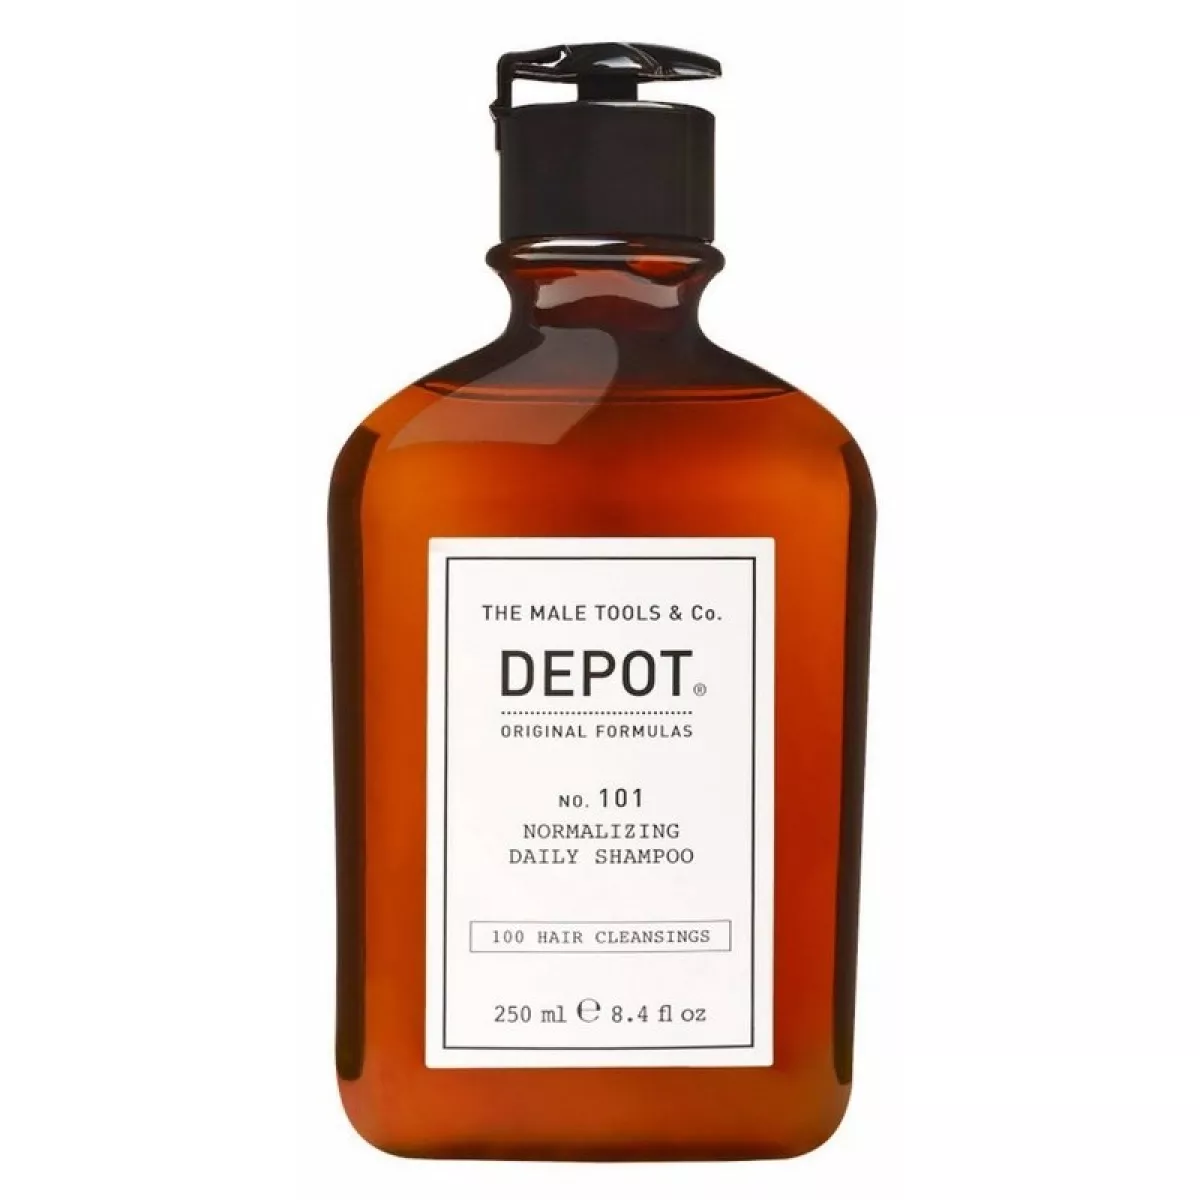 #1 - Depot No. 101 Normalizing Daily Shampoo 250 ml